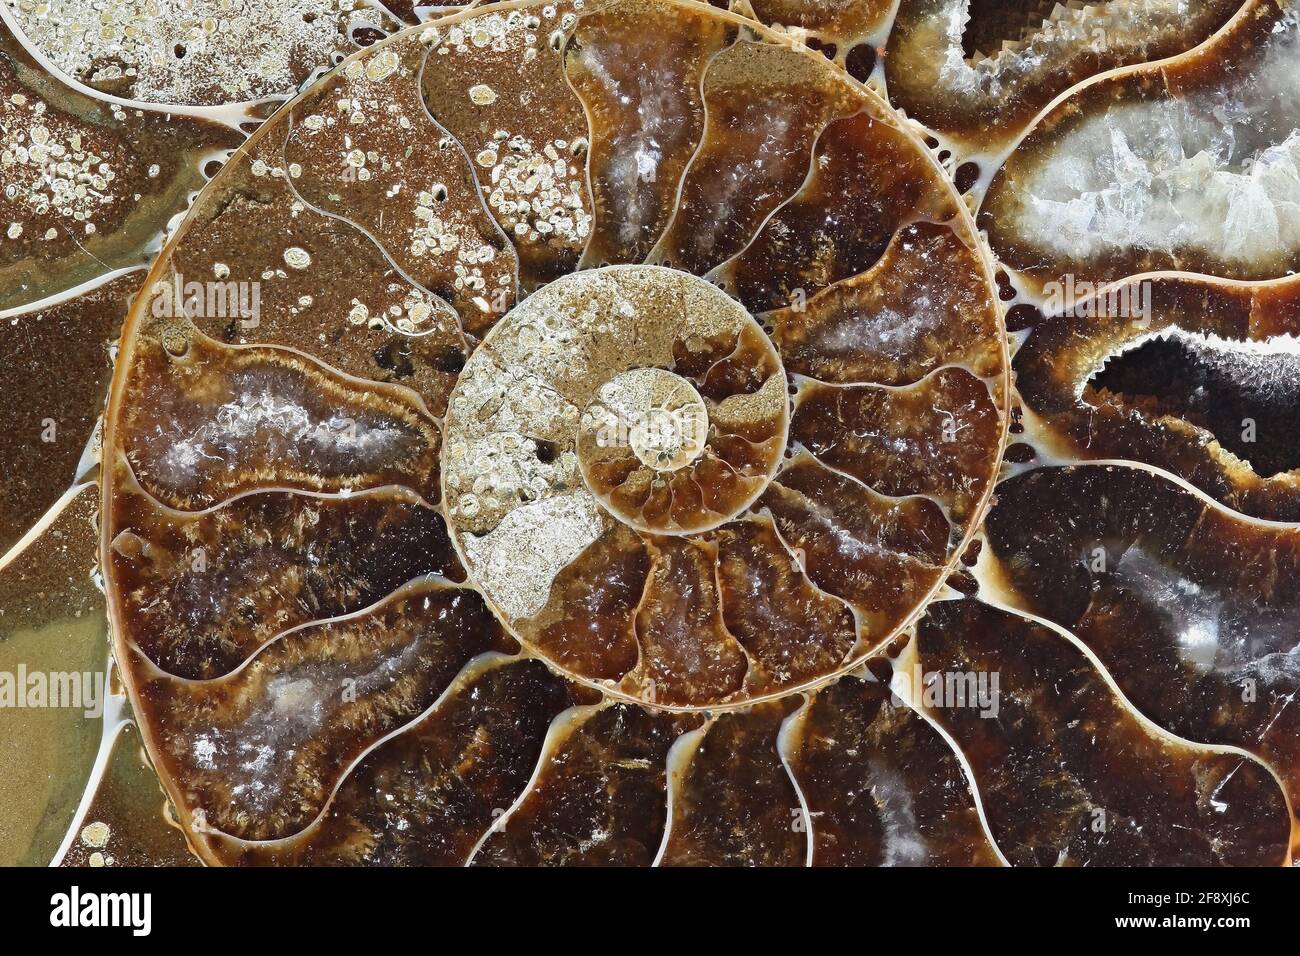 This is prehistoric fossilized mollusk called ammonite, an extinct marine animal. Stock Photo